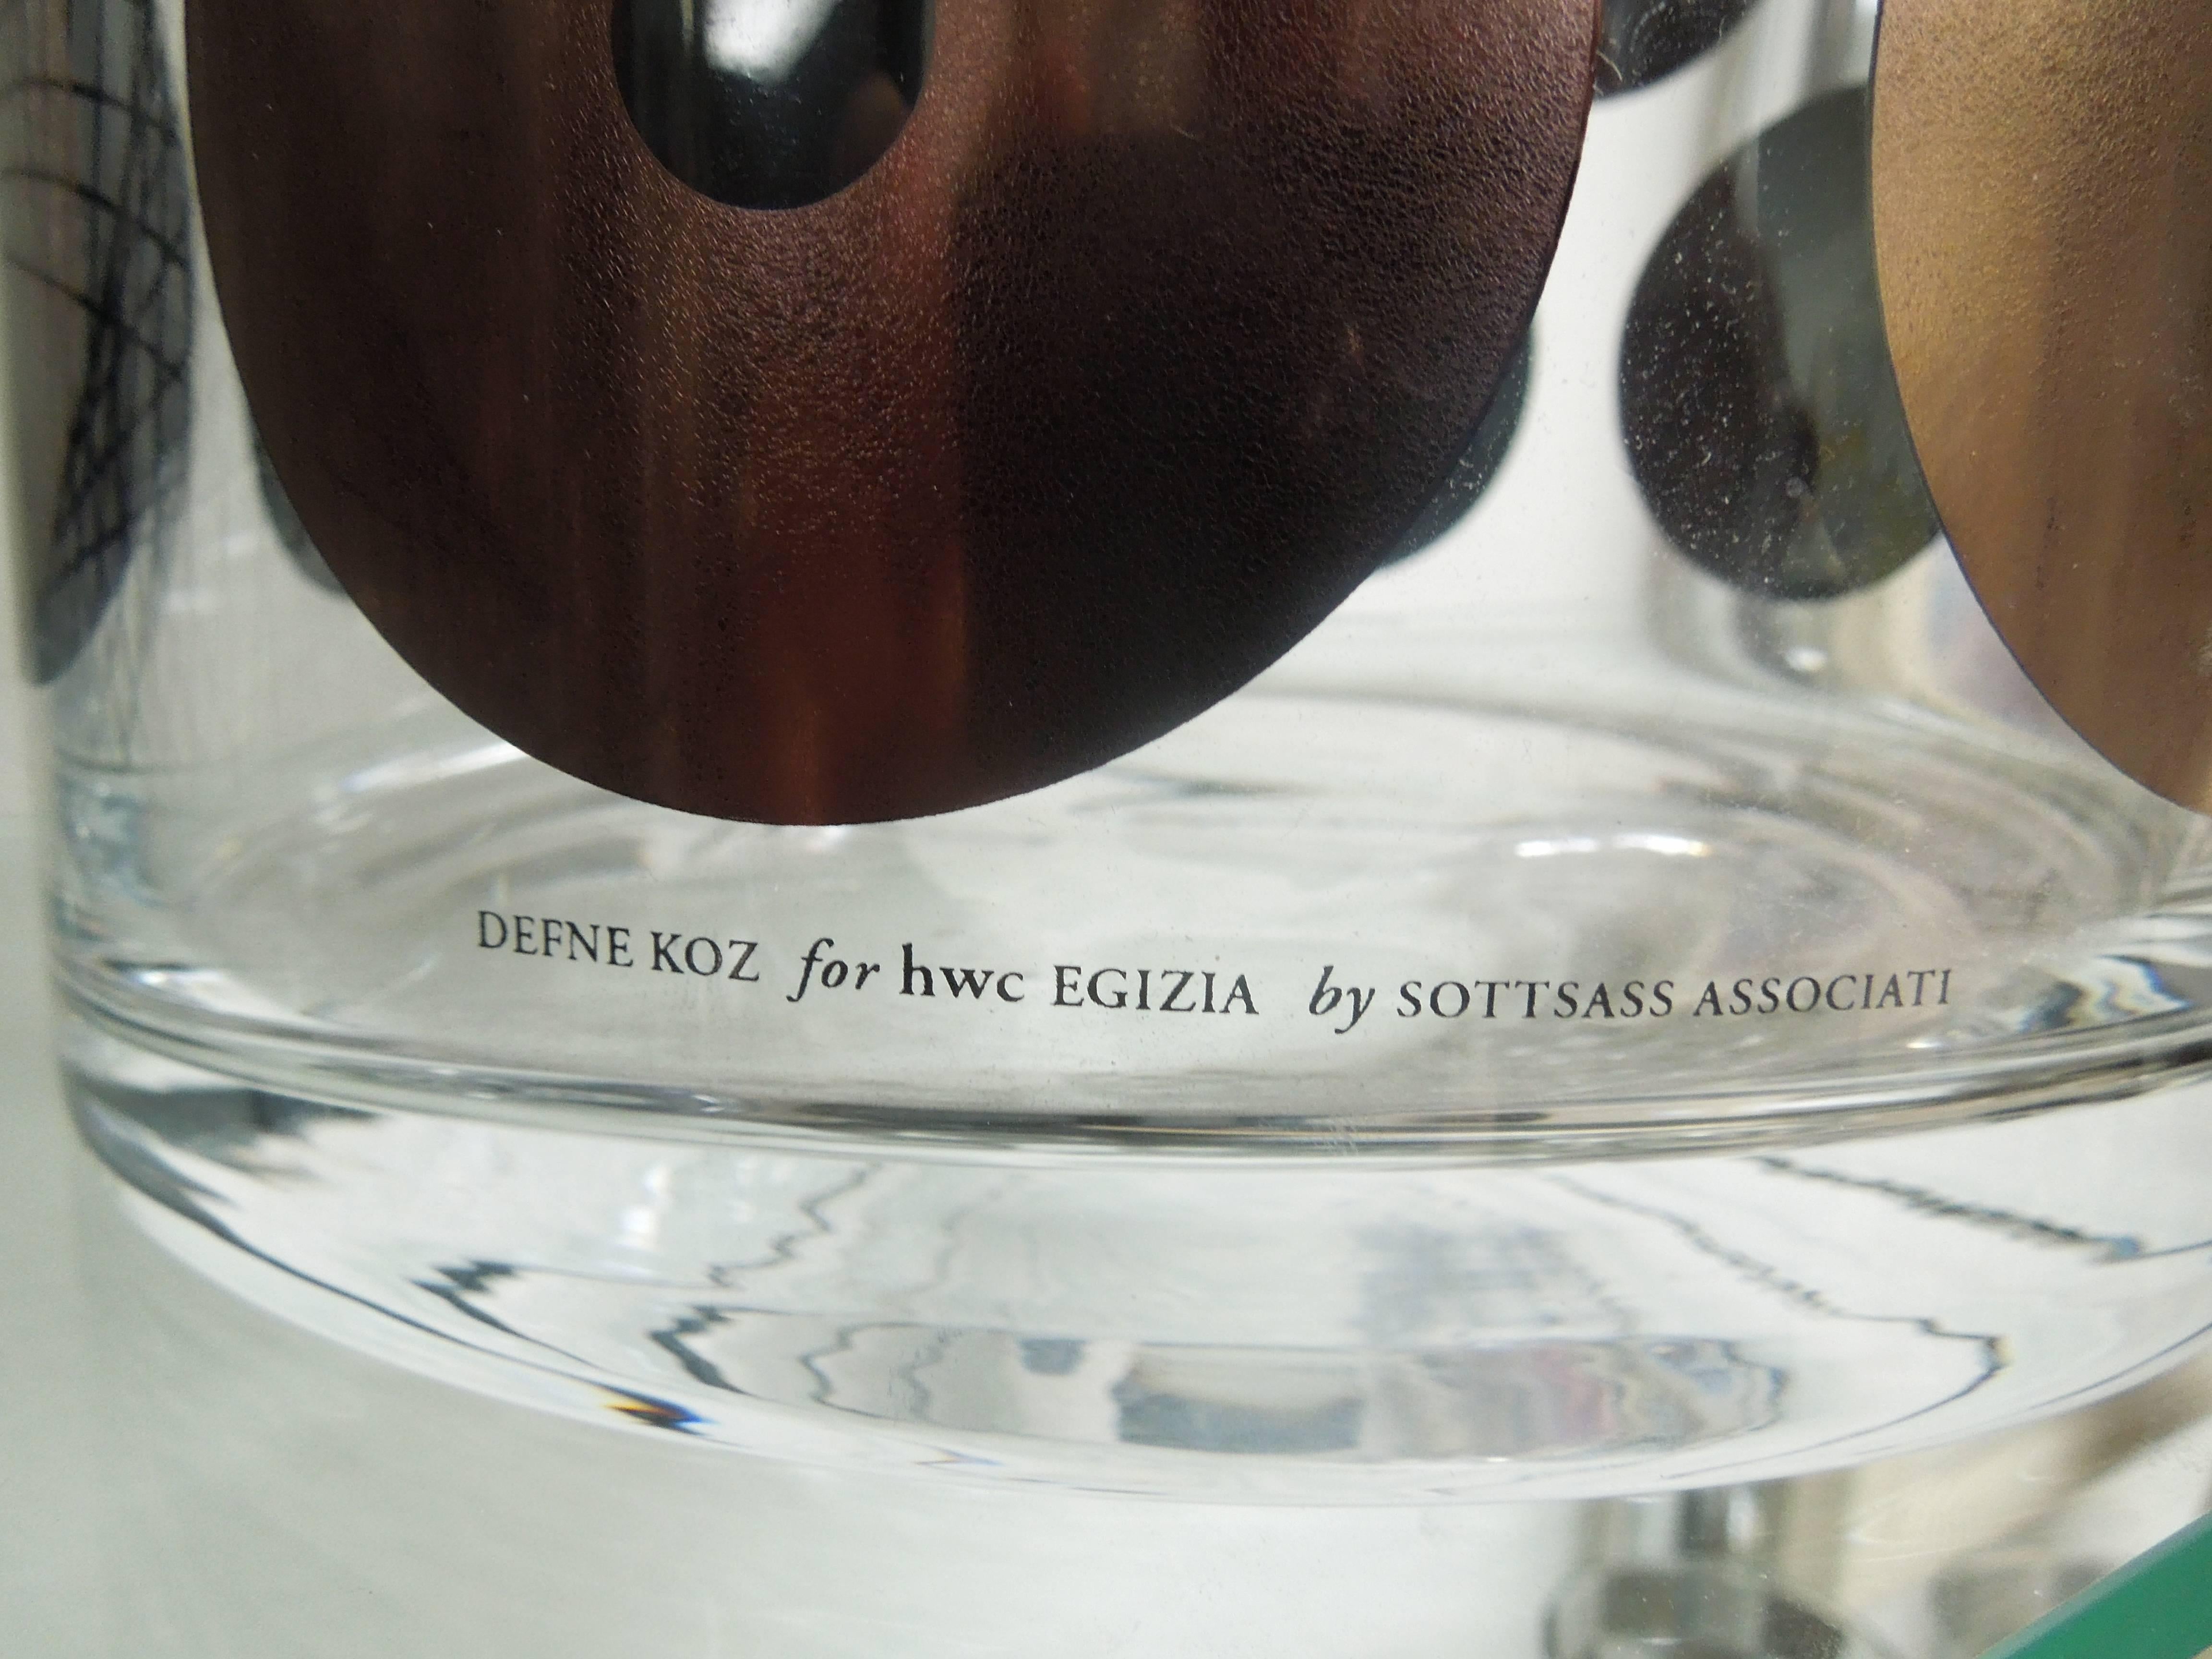 Late 20th Century Italian Modern Glass Cylinders by Karim Rashid and Sottsass Assoc for Egizia